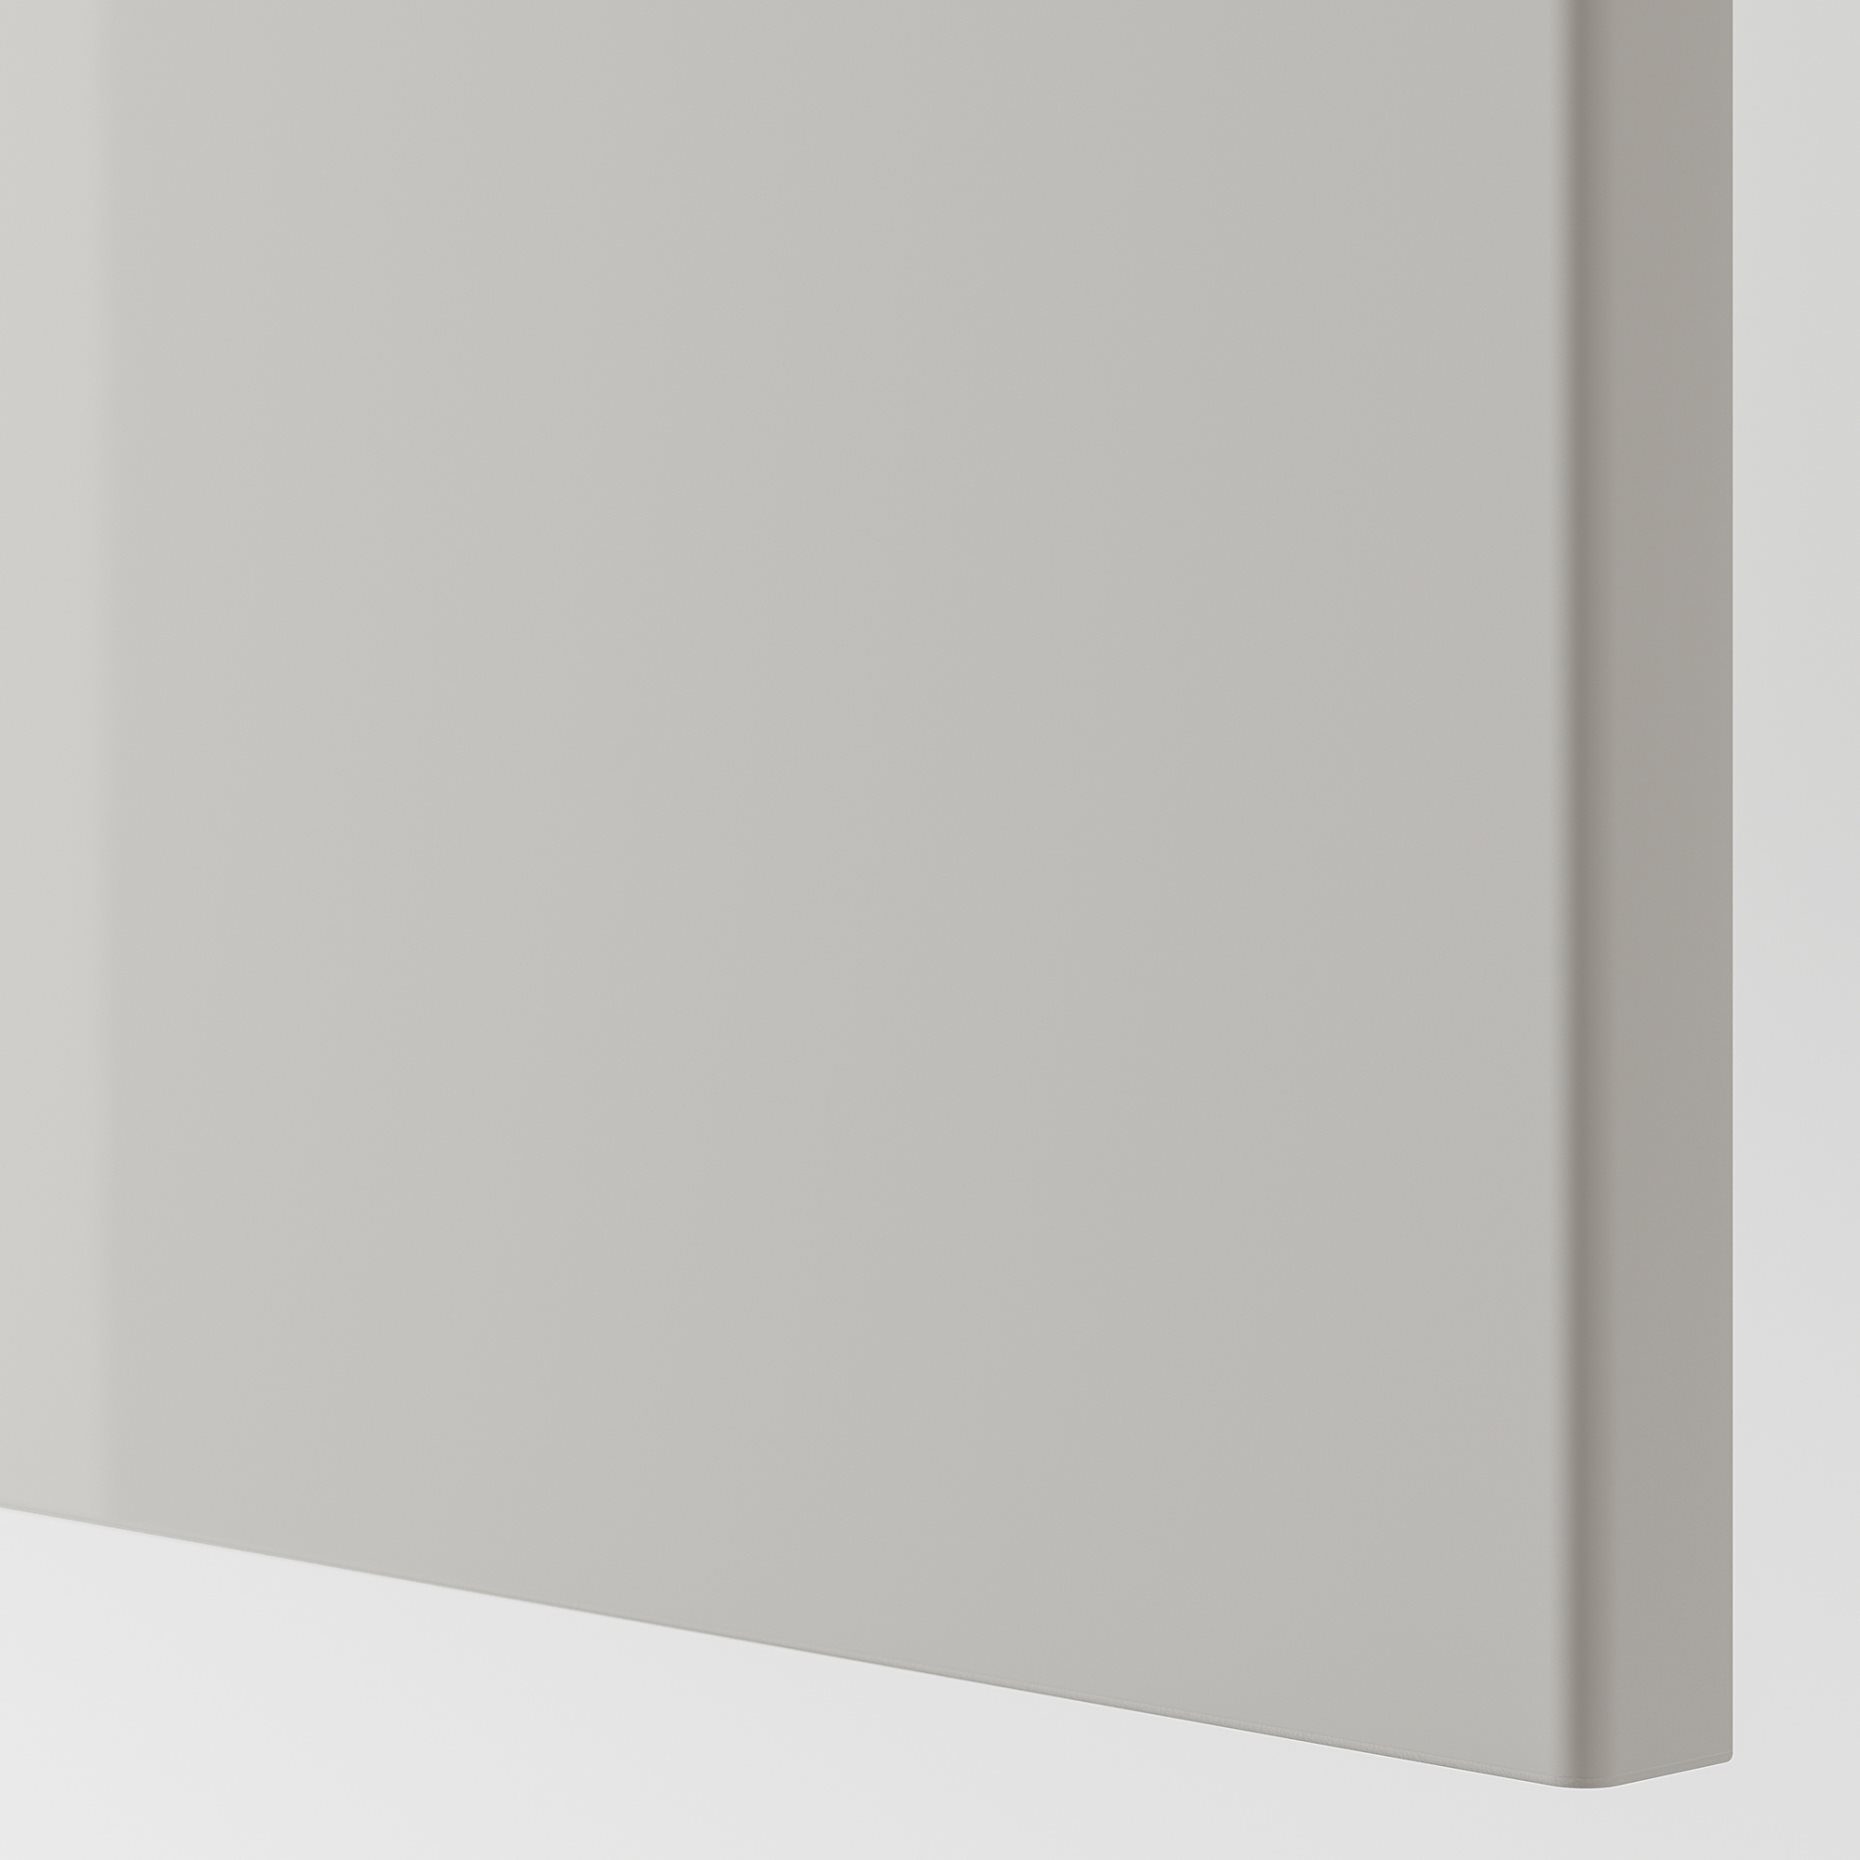 FARDAL, door high-gloss, 50x229 cm, 503.306.06